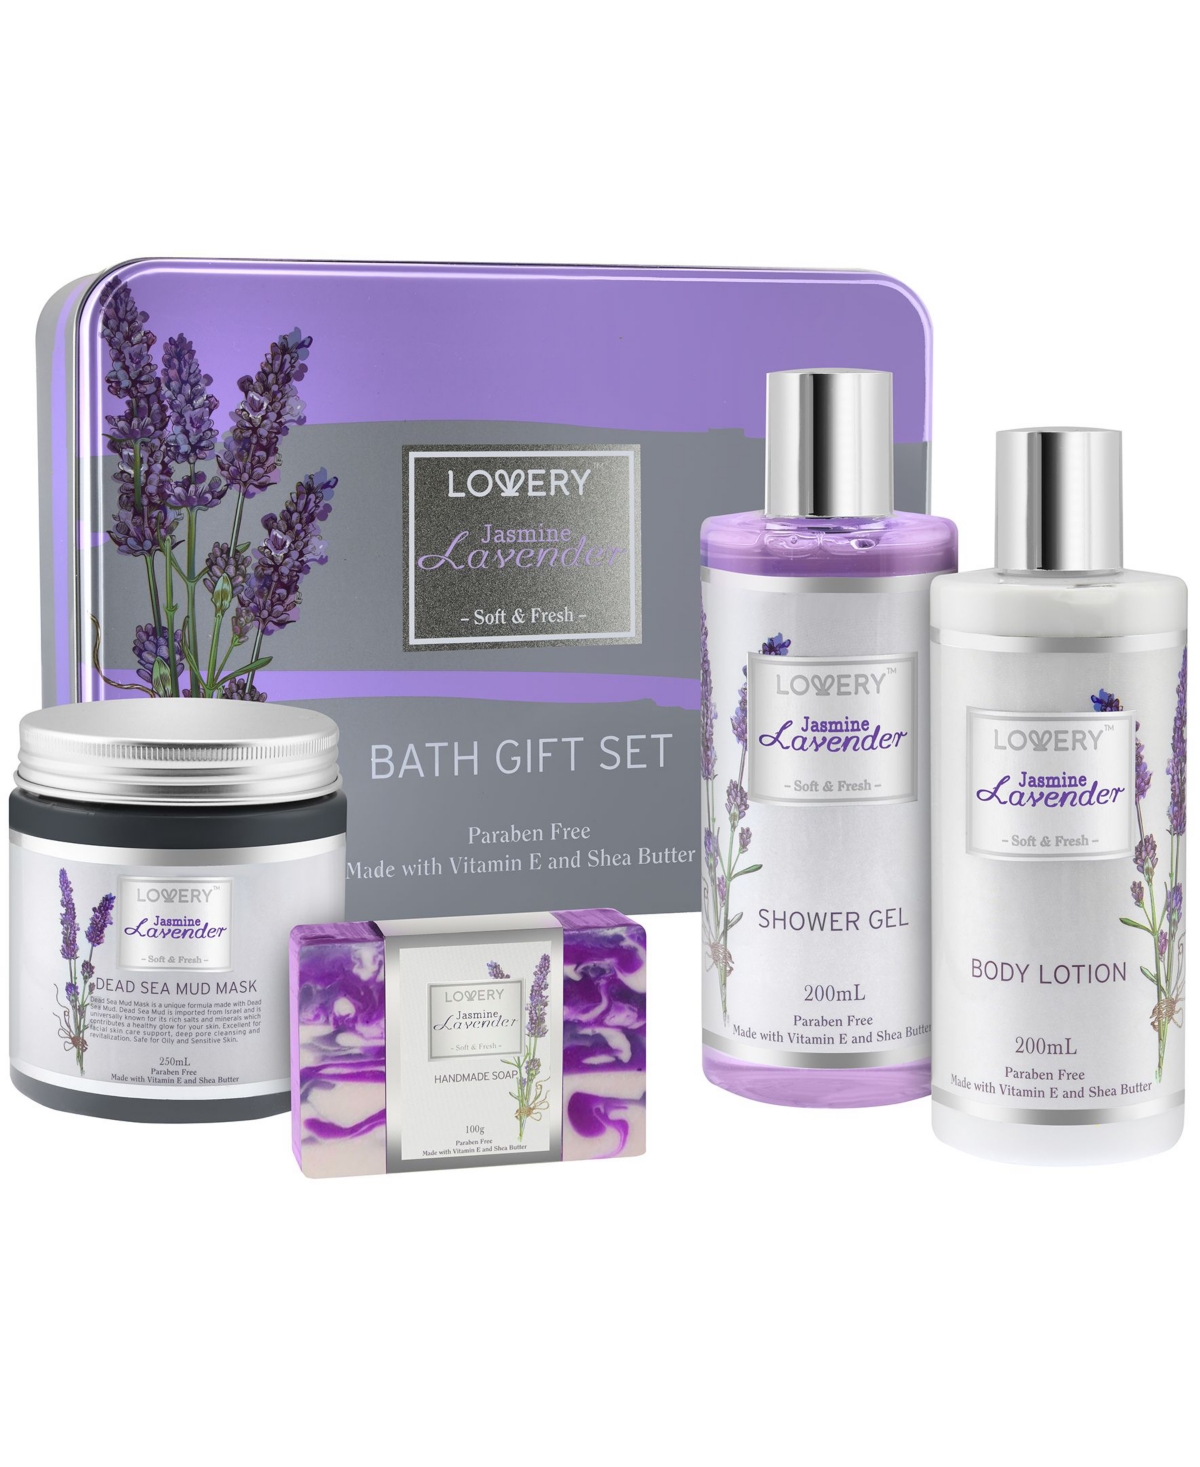 Lovery Jasmine Lavender Bath and Body Gift Set, 5 Piece